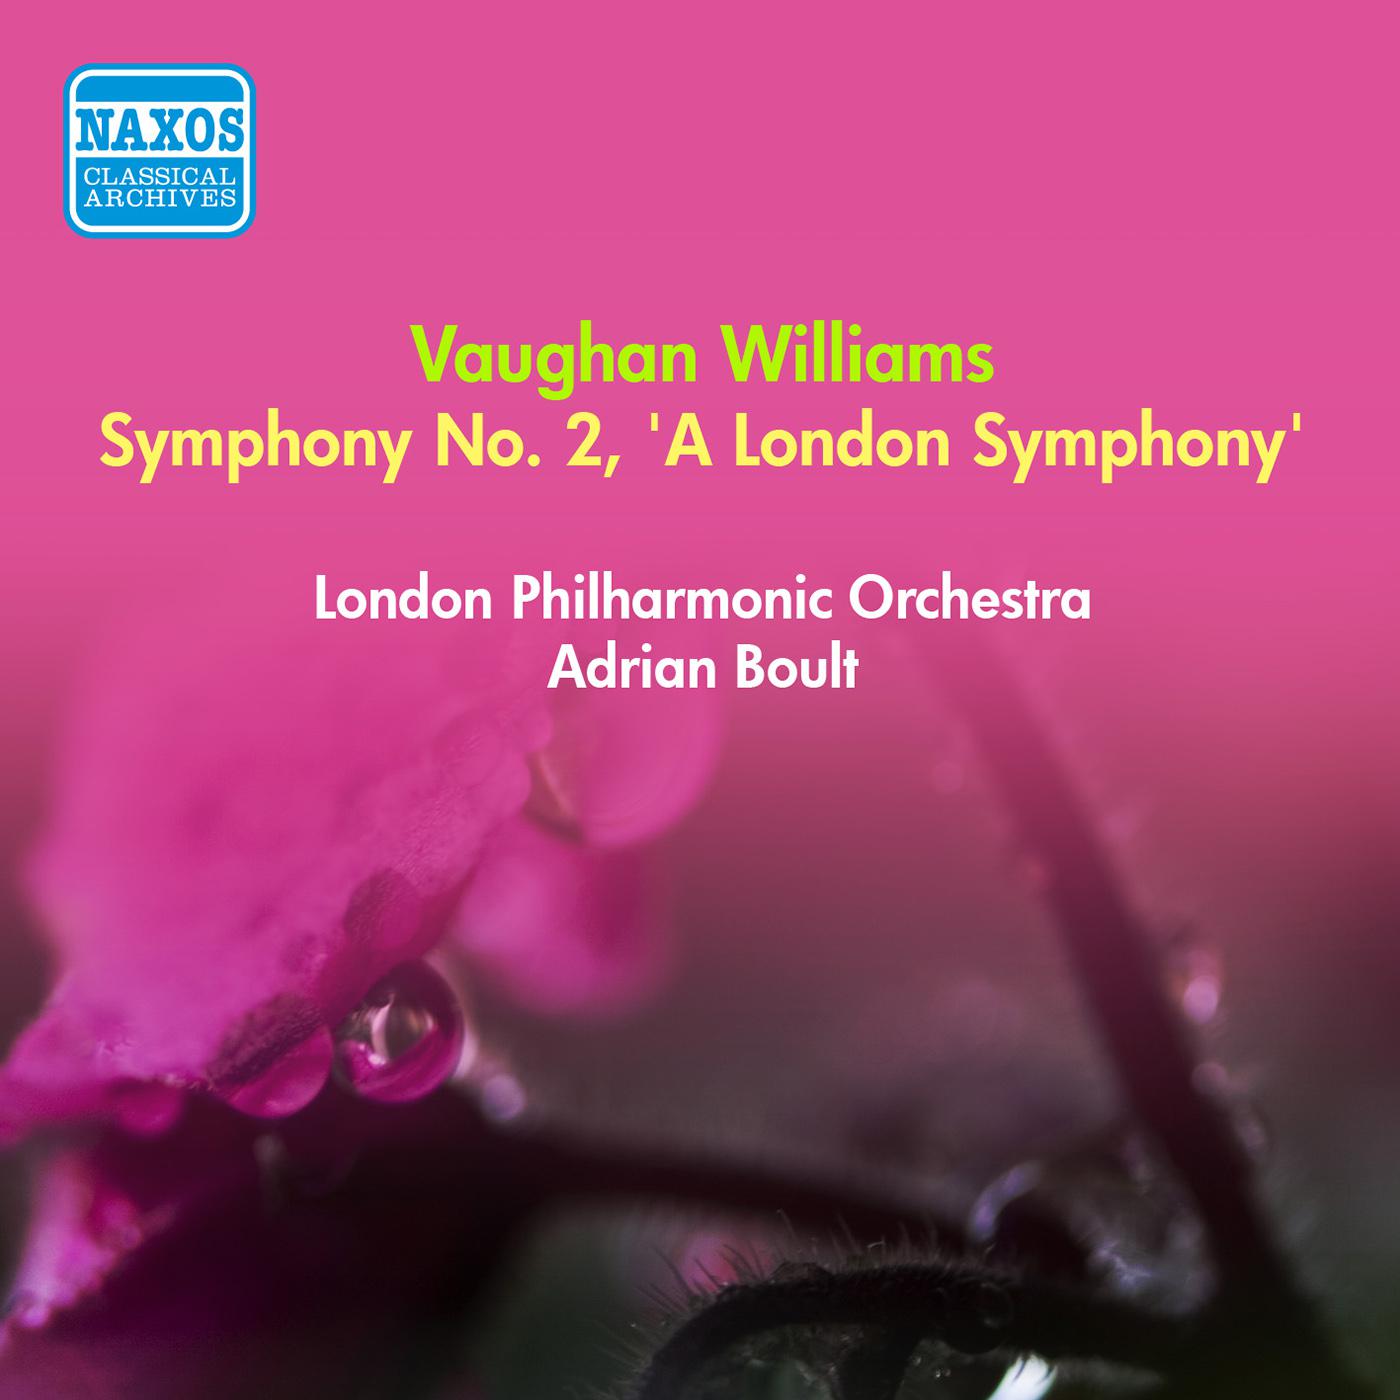 Symphony No. 2, "A London Symphony":IV. Andante con moto - Maestoso alla marcia (Quasi lento)